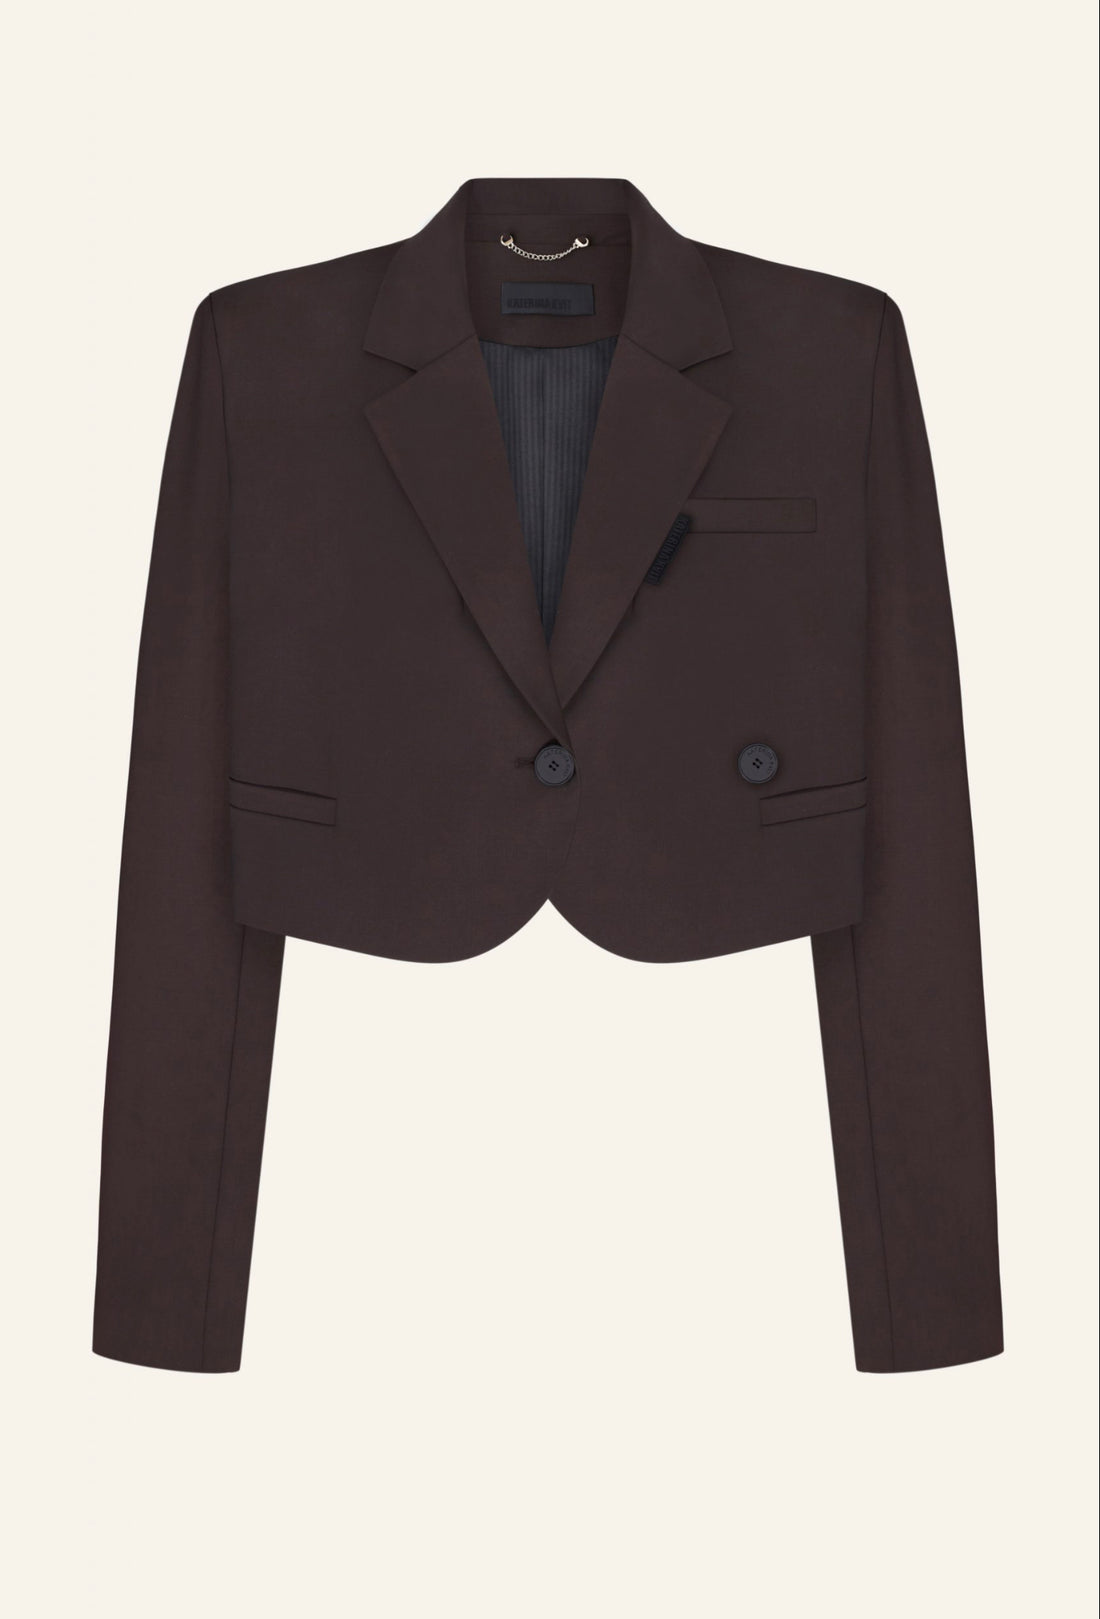 Brown wool short jacket (K.KVIT, T.MOSCA) JAW232402